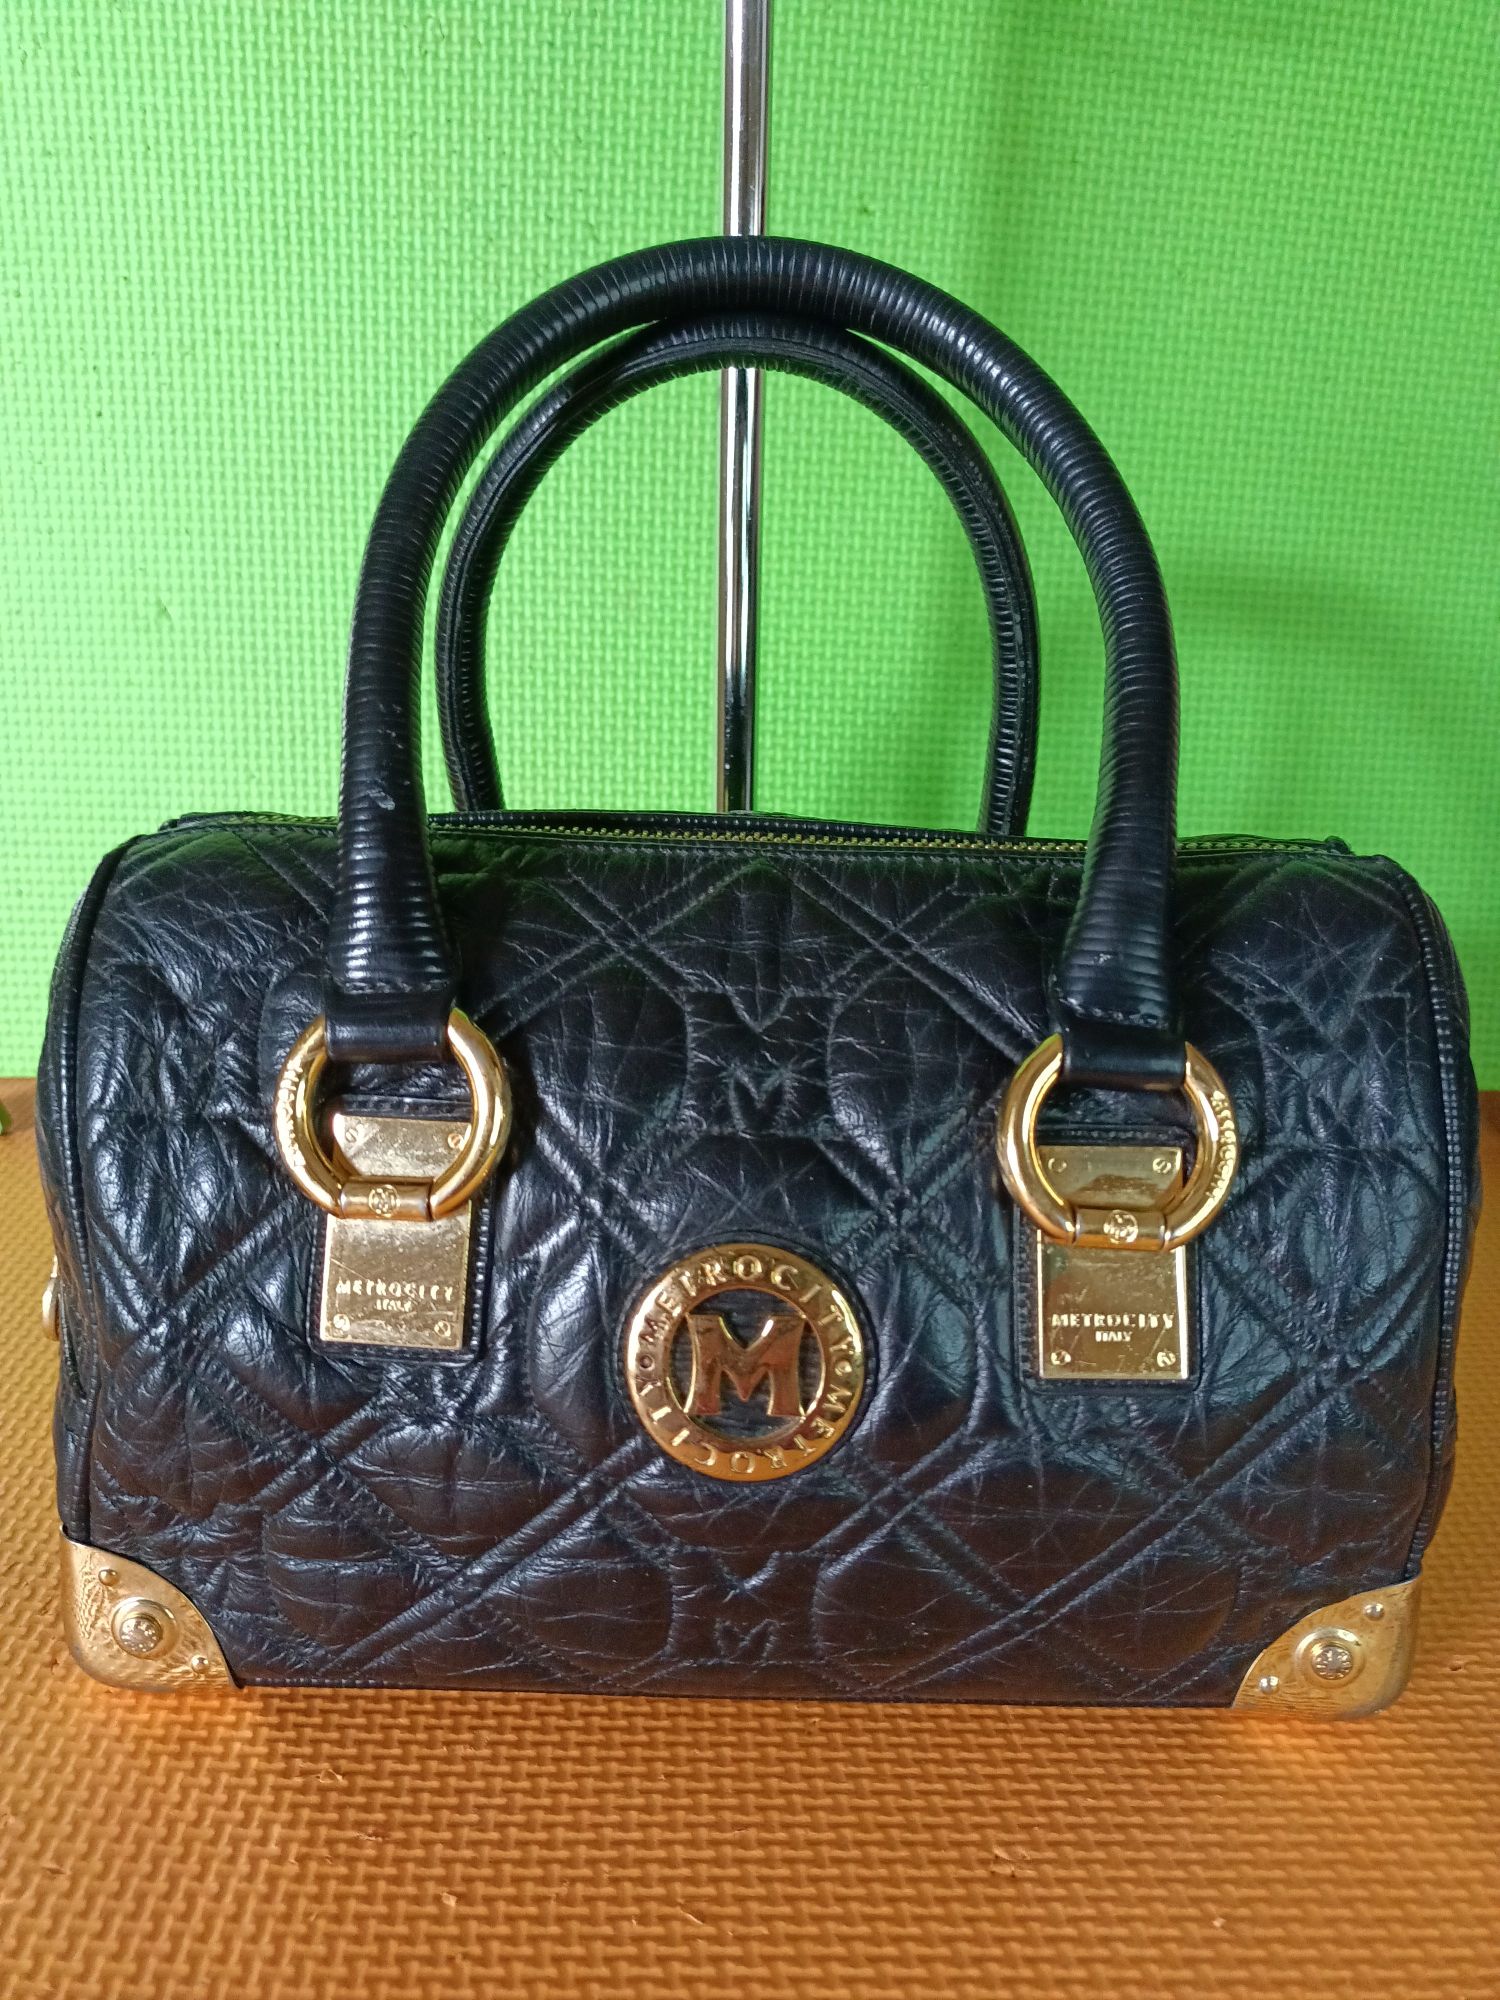 Handbag Restoration DIY, Metrocity Bag